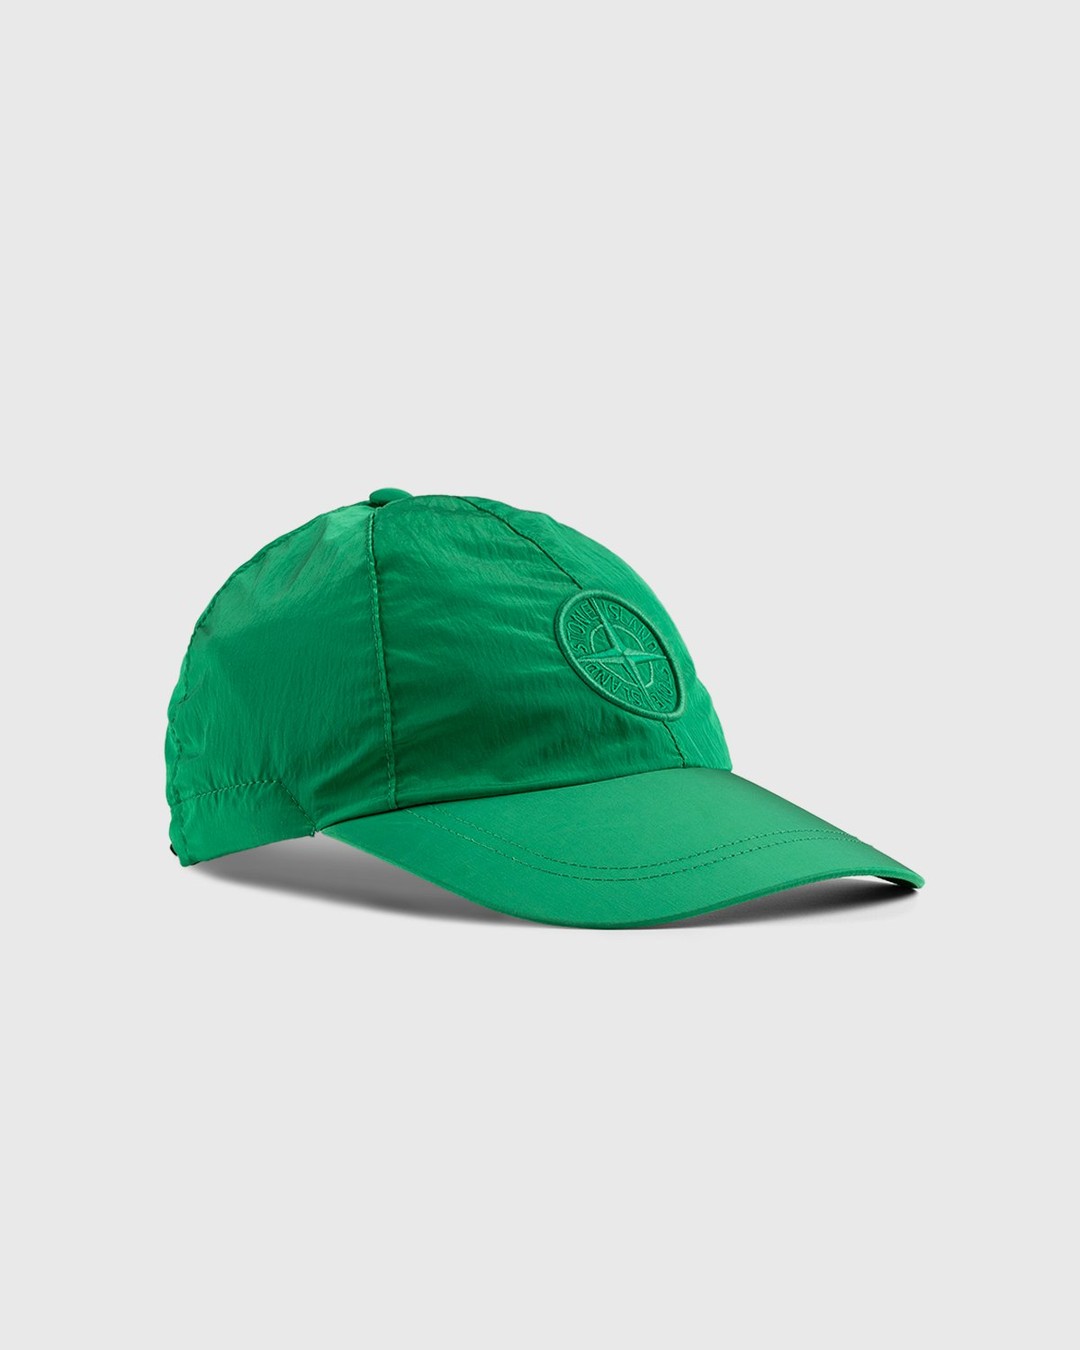 Stone Island – Six Panel Hat Green - Caps - Green - Image 1